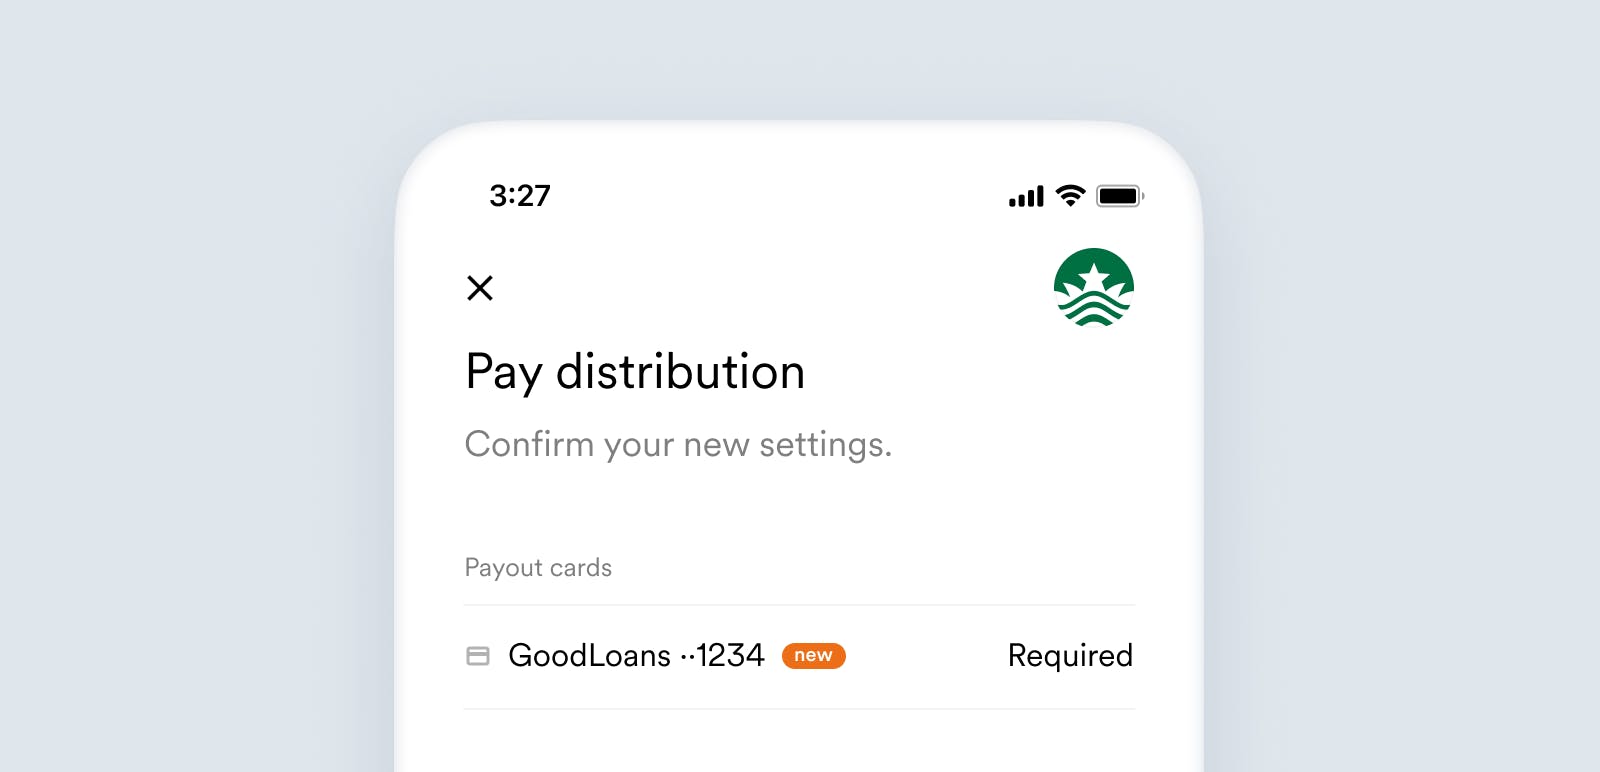 Pay distribution